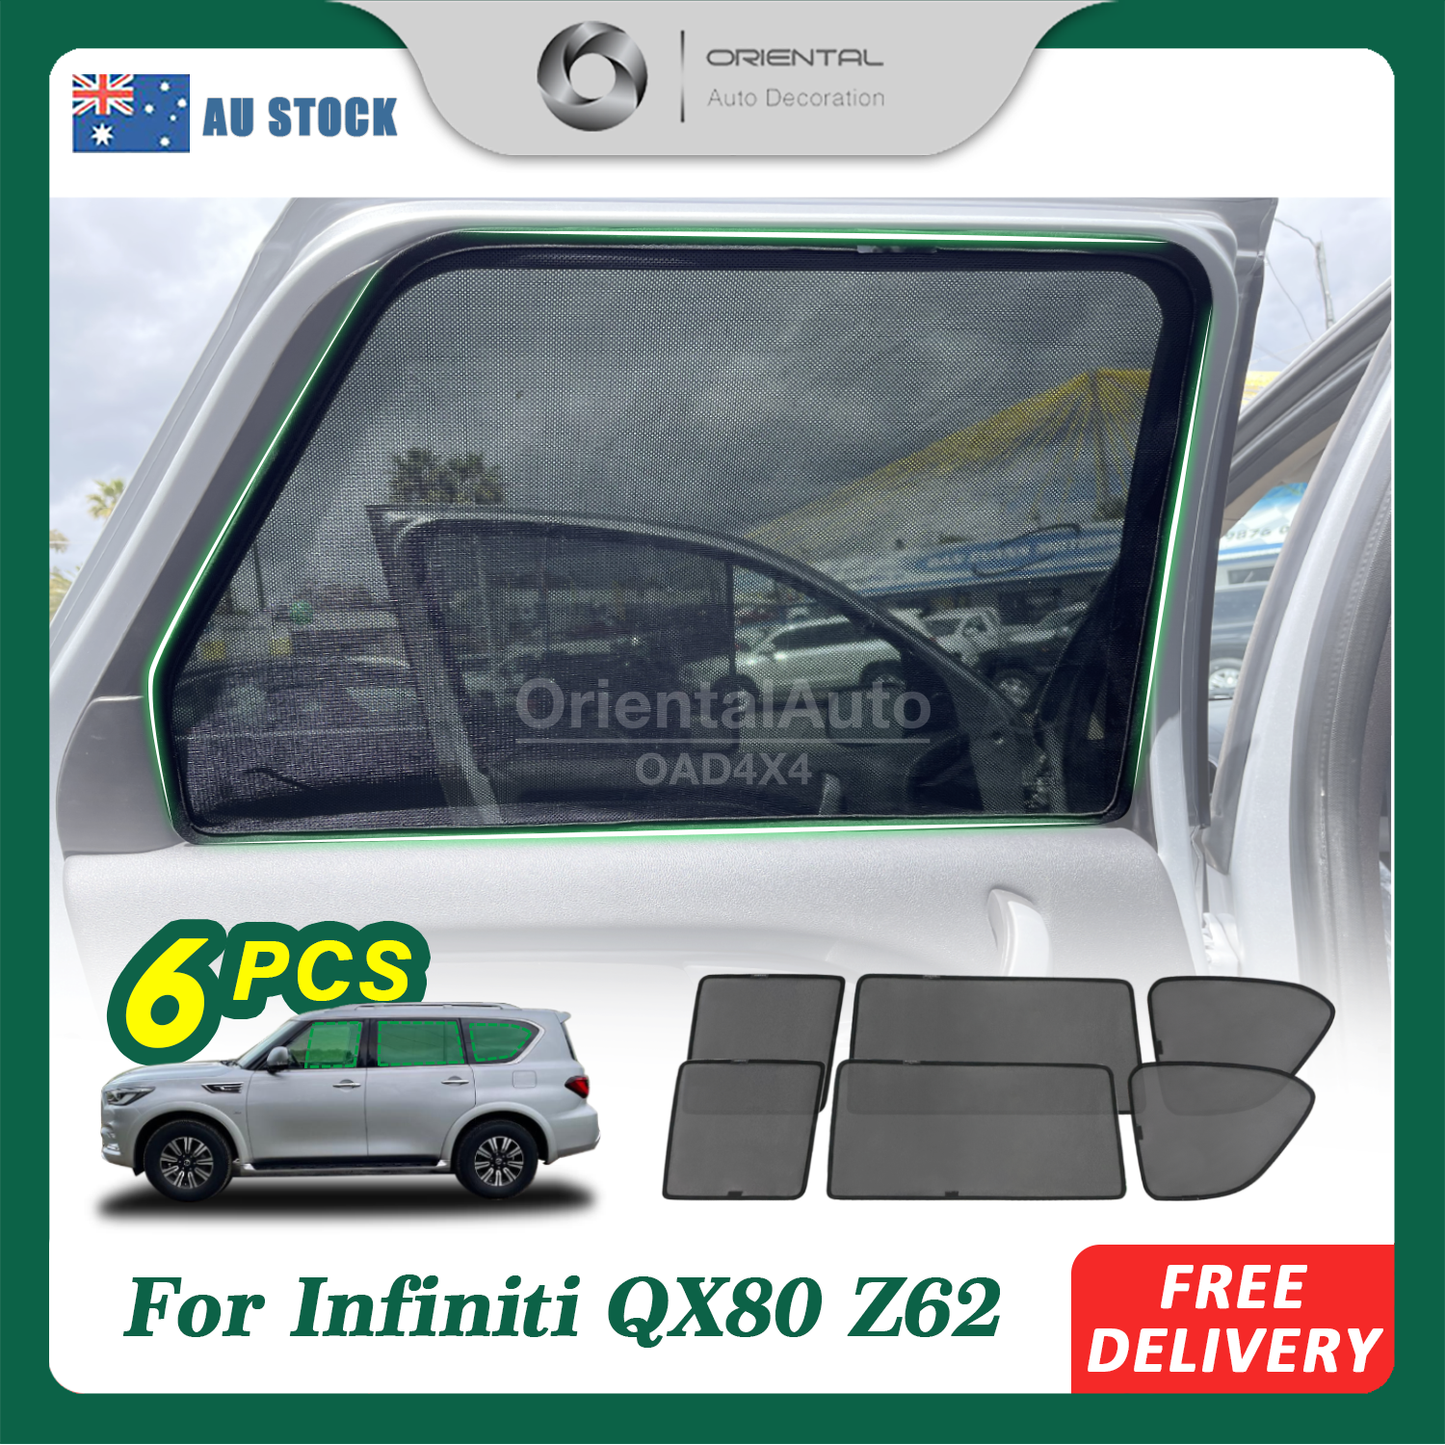 6PCS Magnetic Sun Shade for Infiniti QX80 Z62 2015-2019 Window Sun Shades UV Protection Mesh Cover